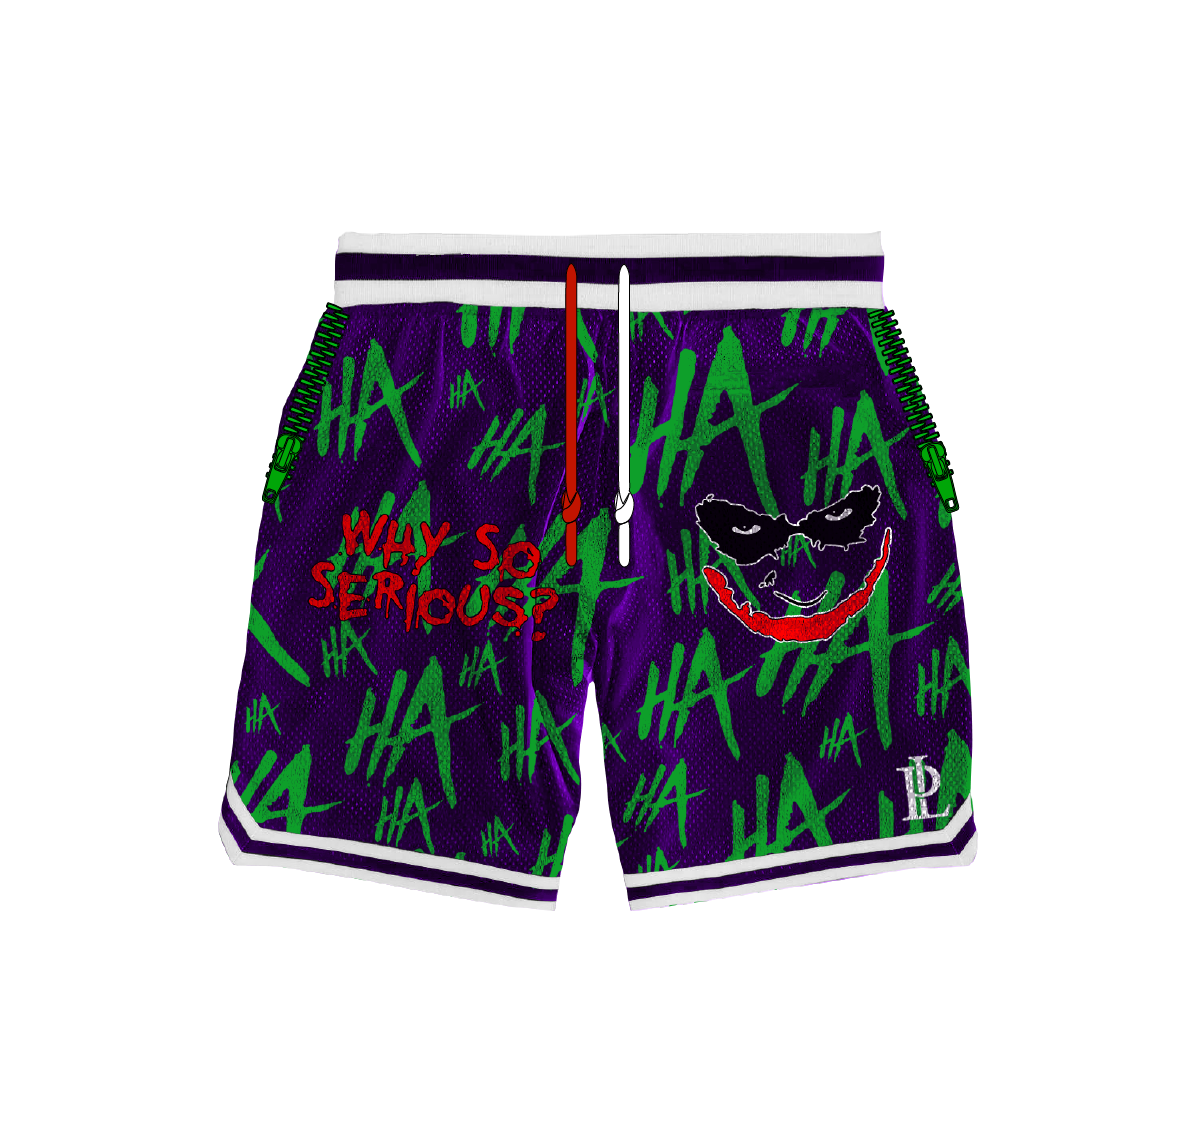 Joker "Haha" Green & Purple Shorts